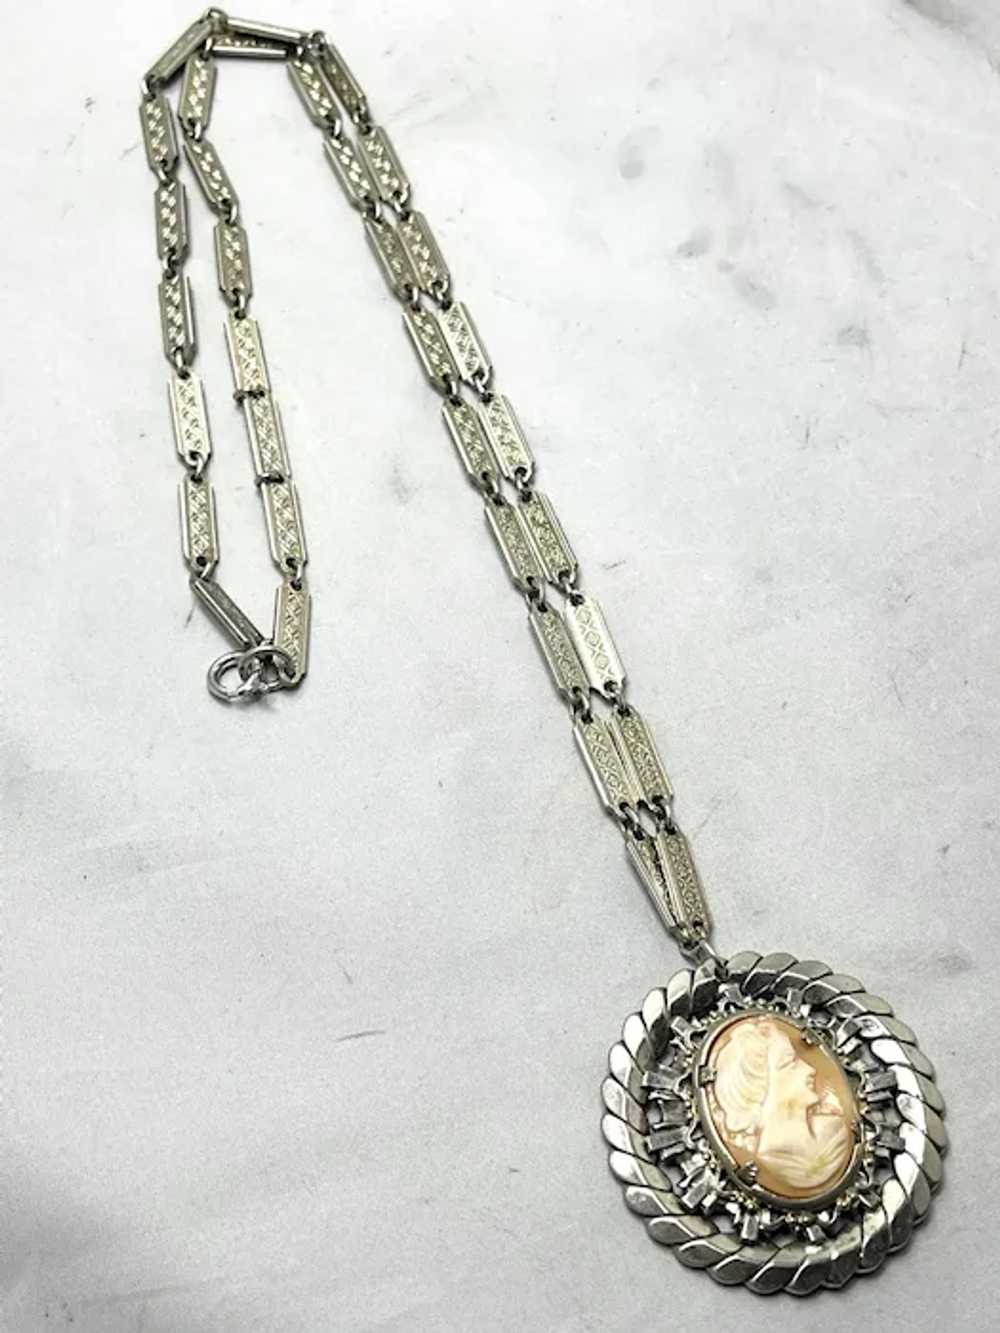 Vintage Cameo Pendant Chain Necklace - image 2